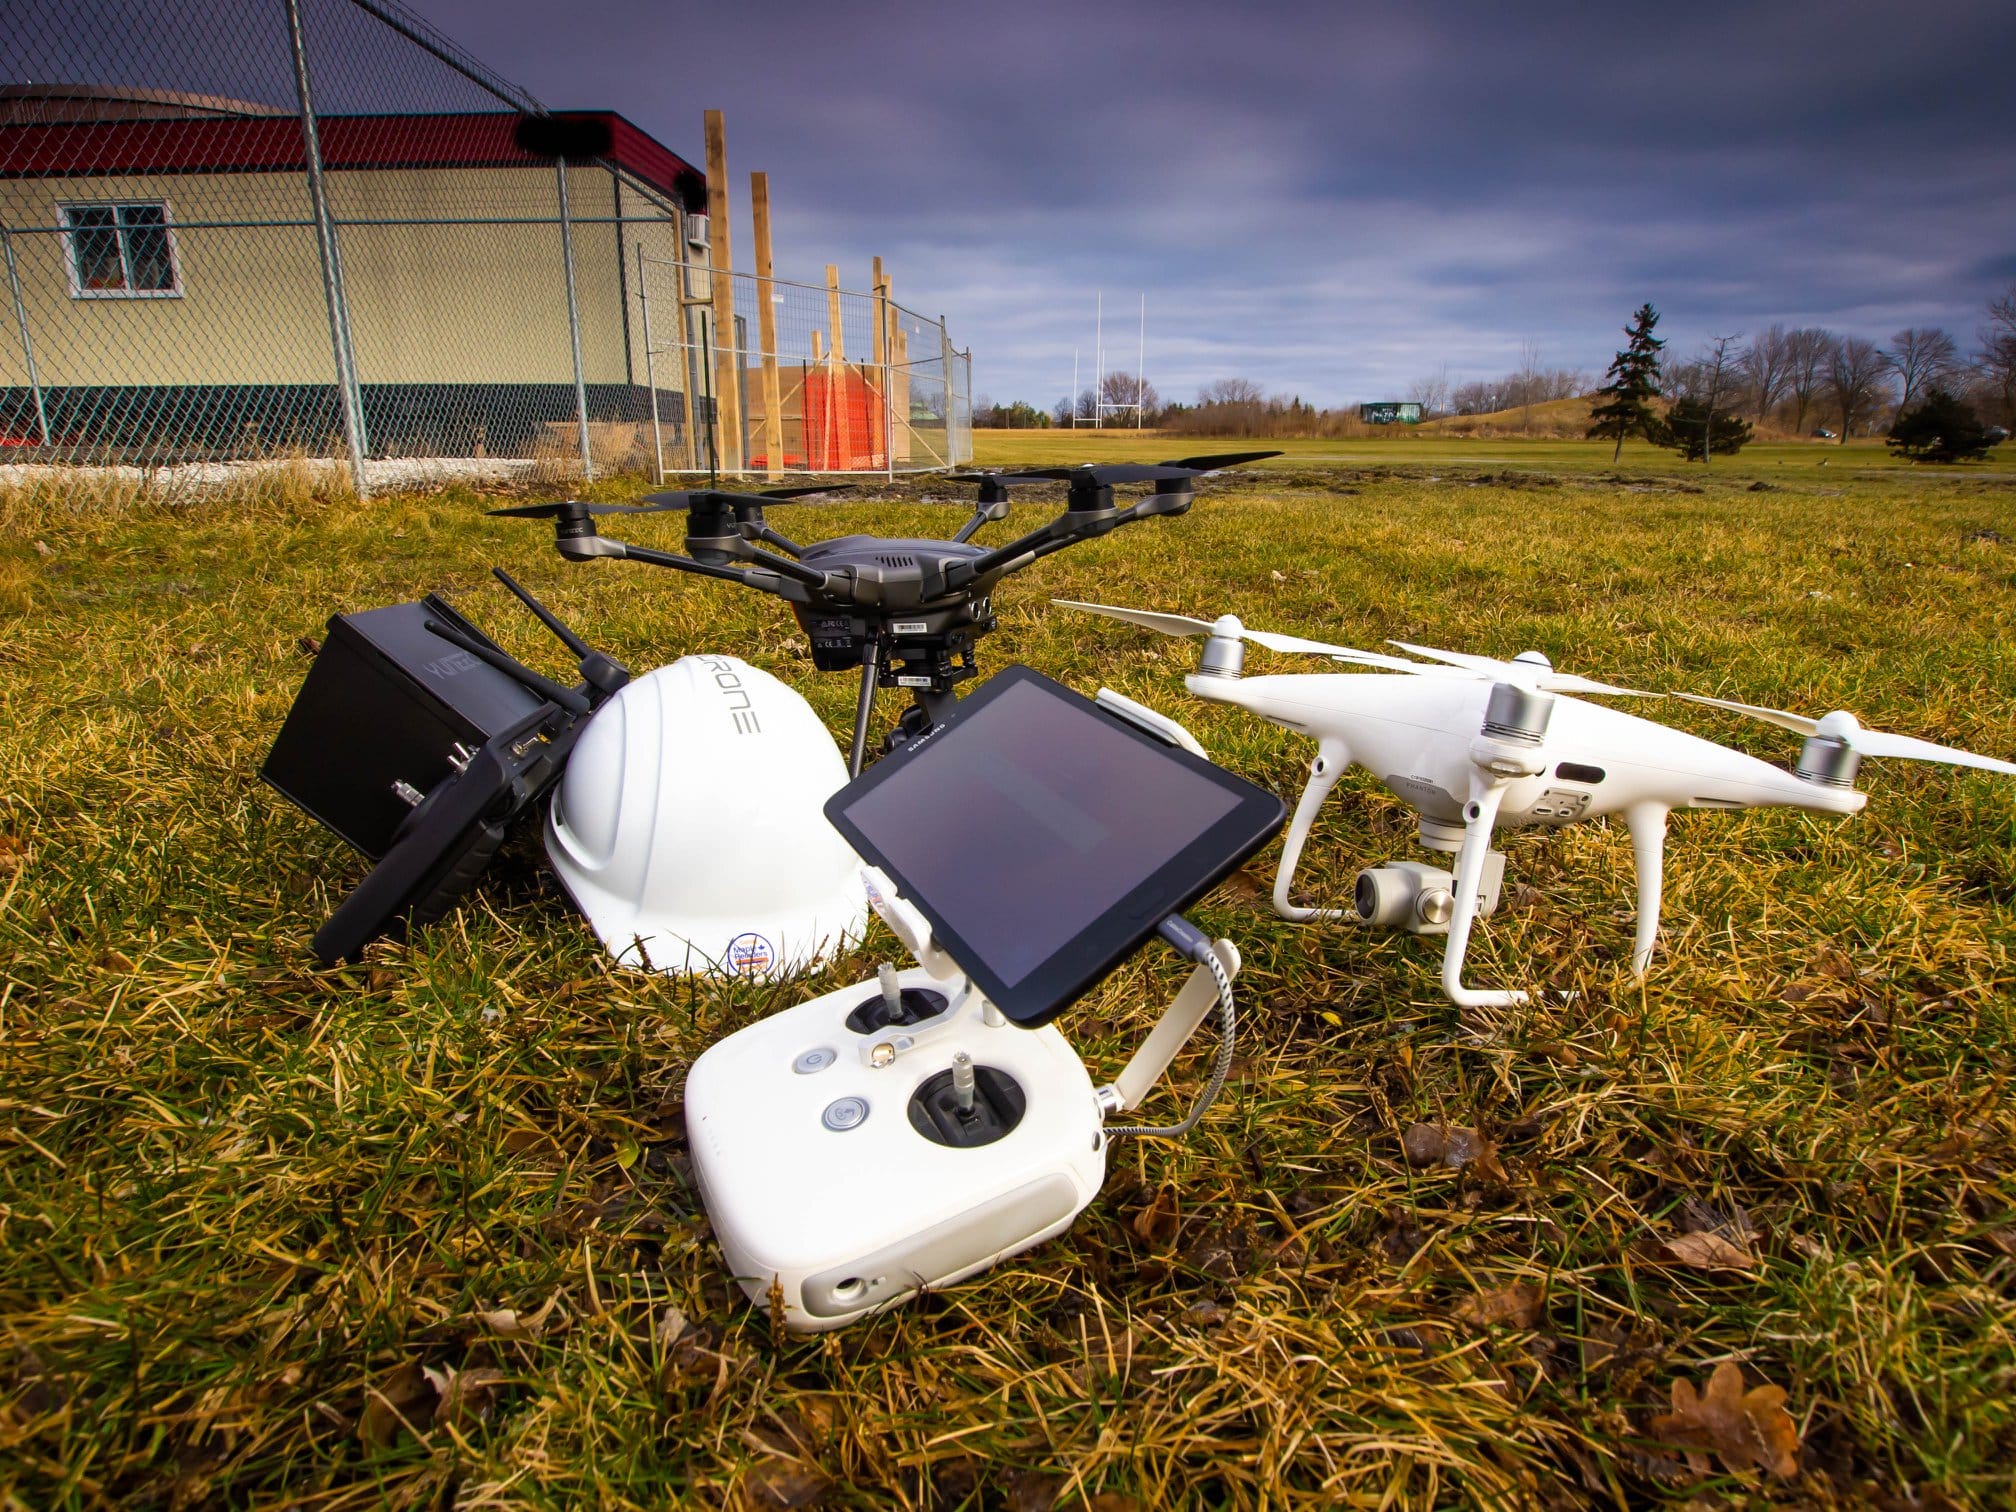 videodrone equipment on site